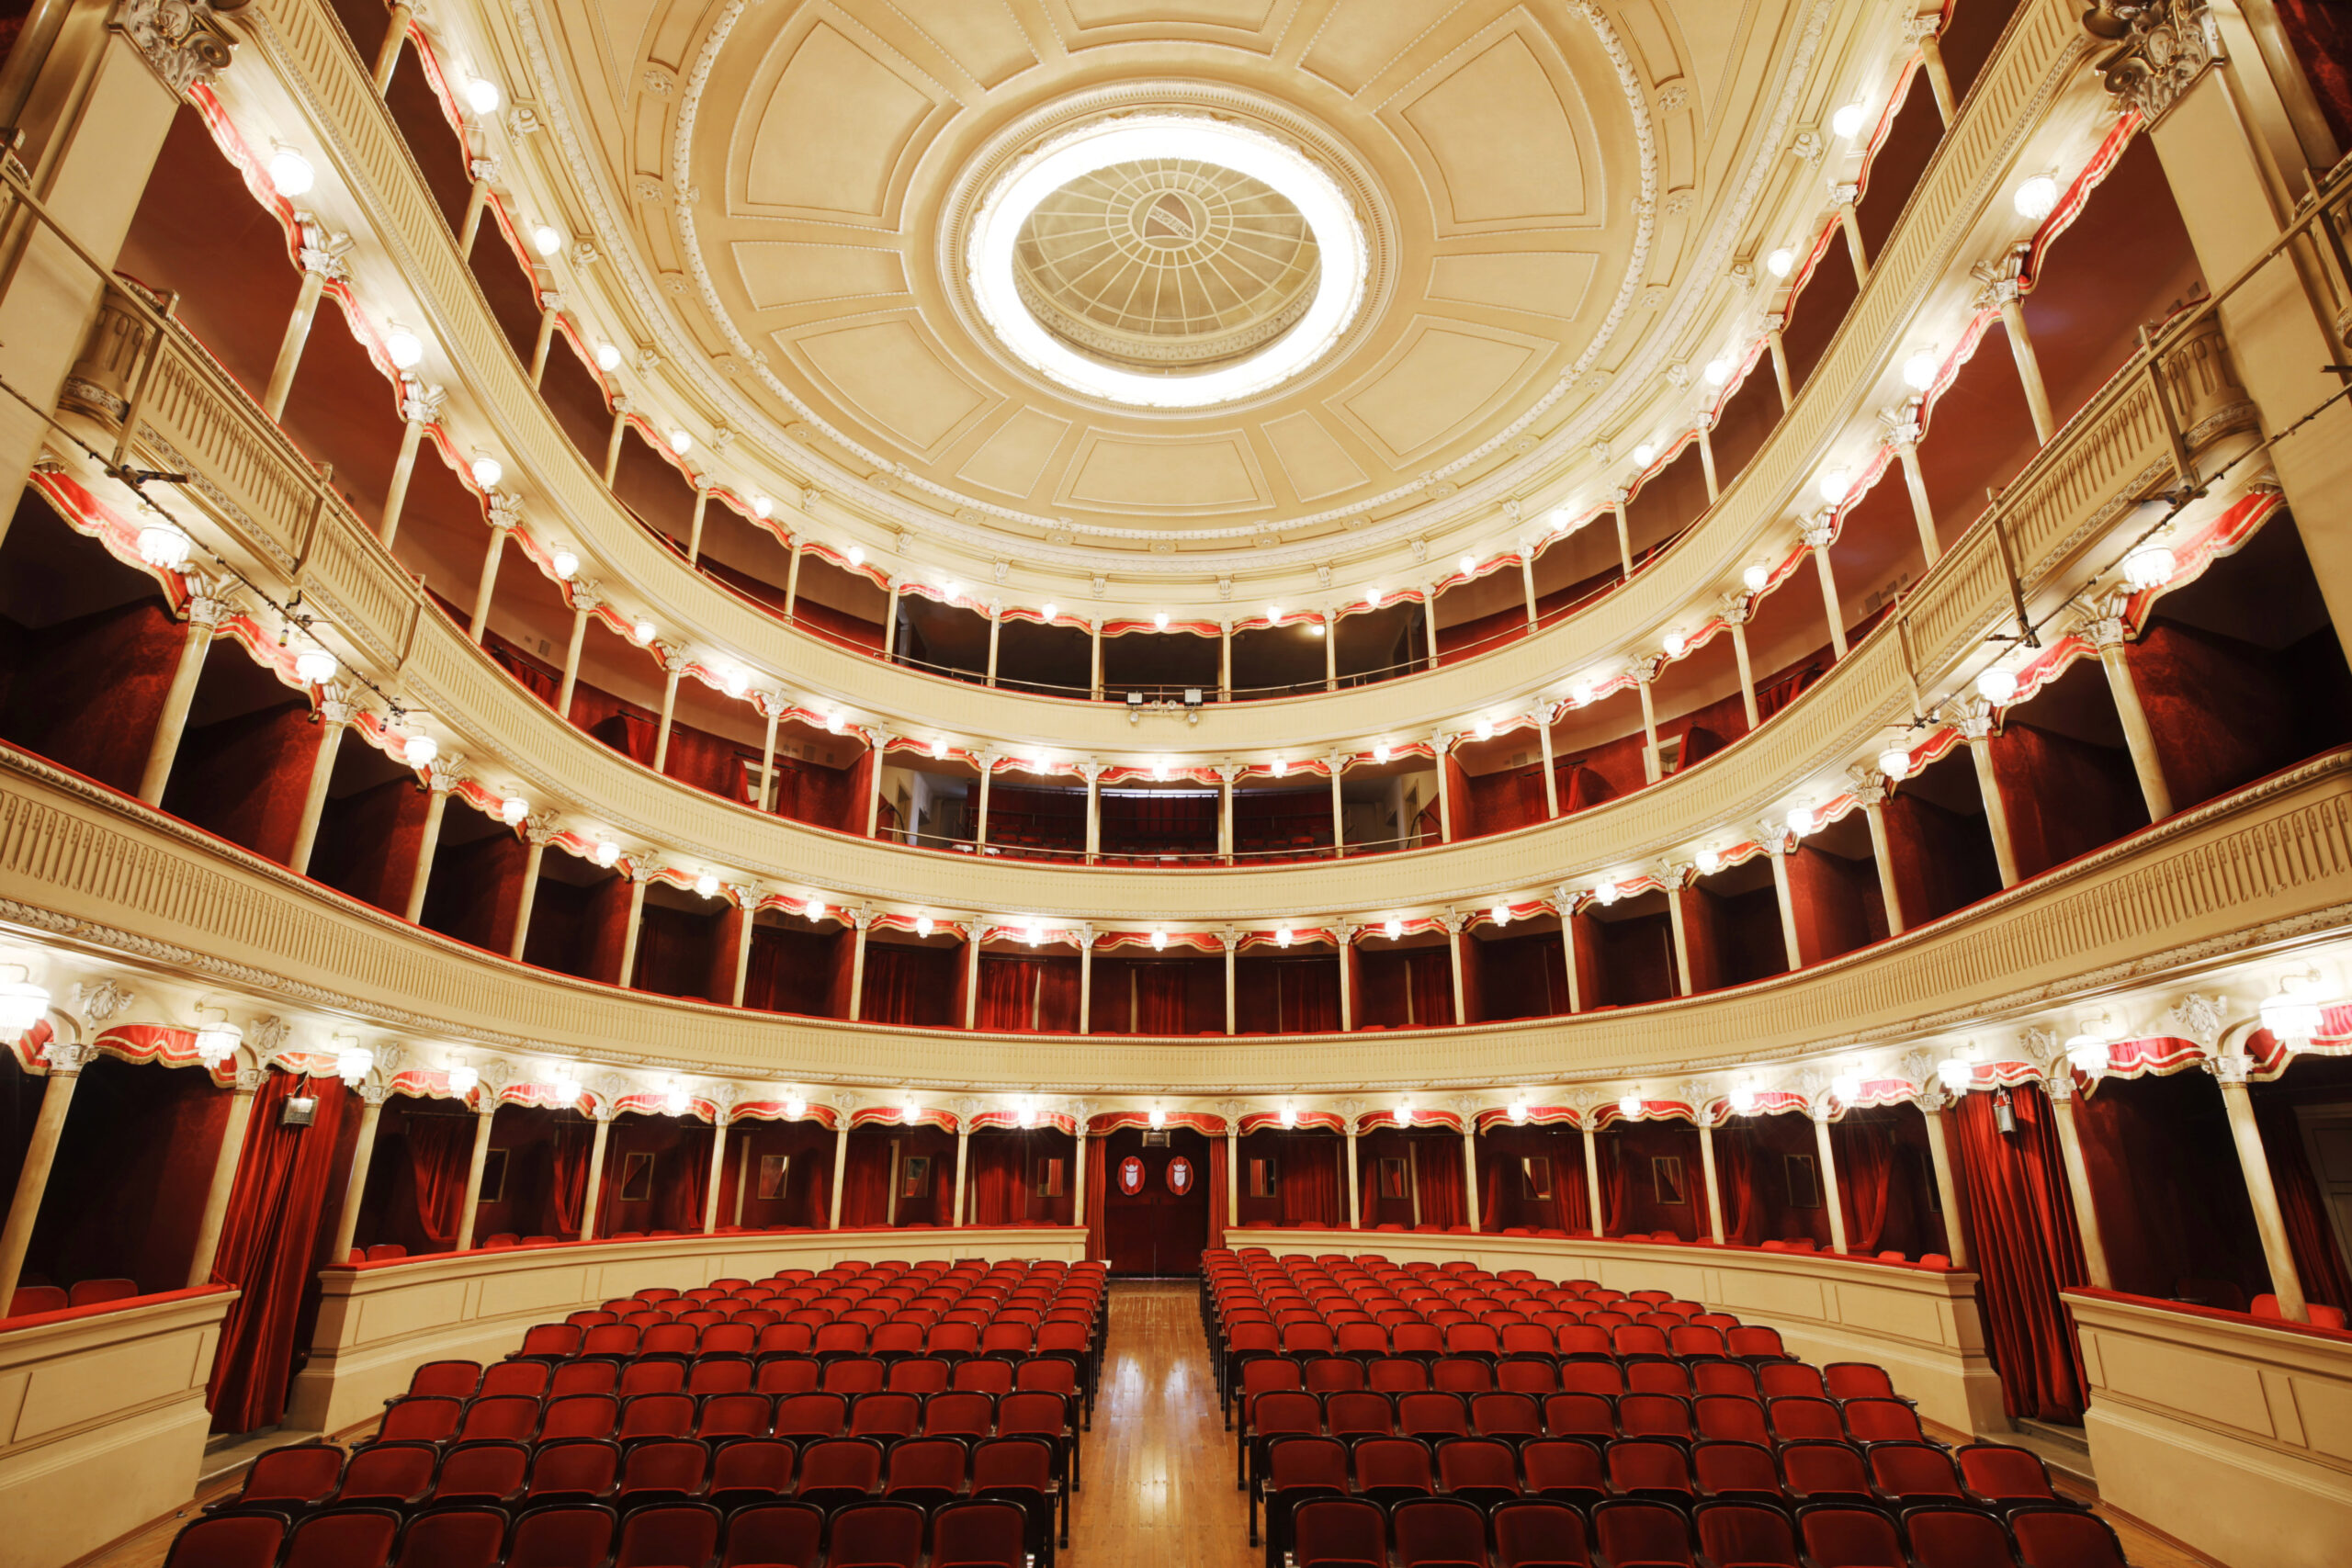 Teatro Maria Caniglia